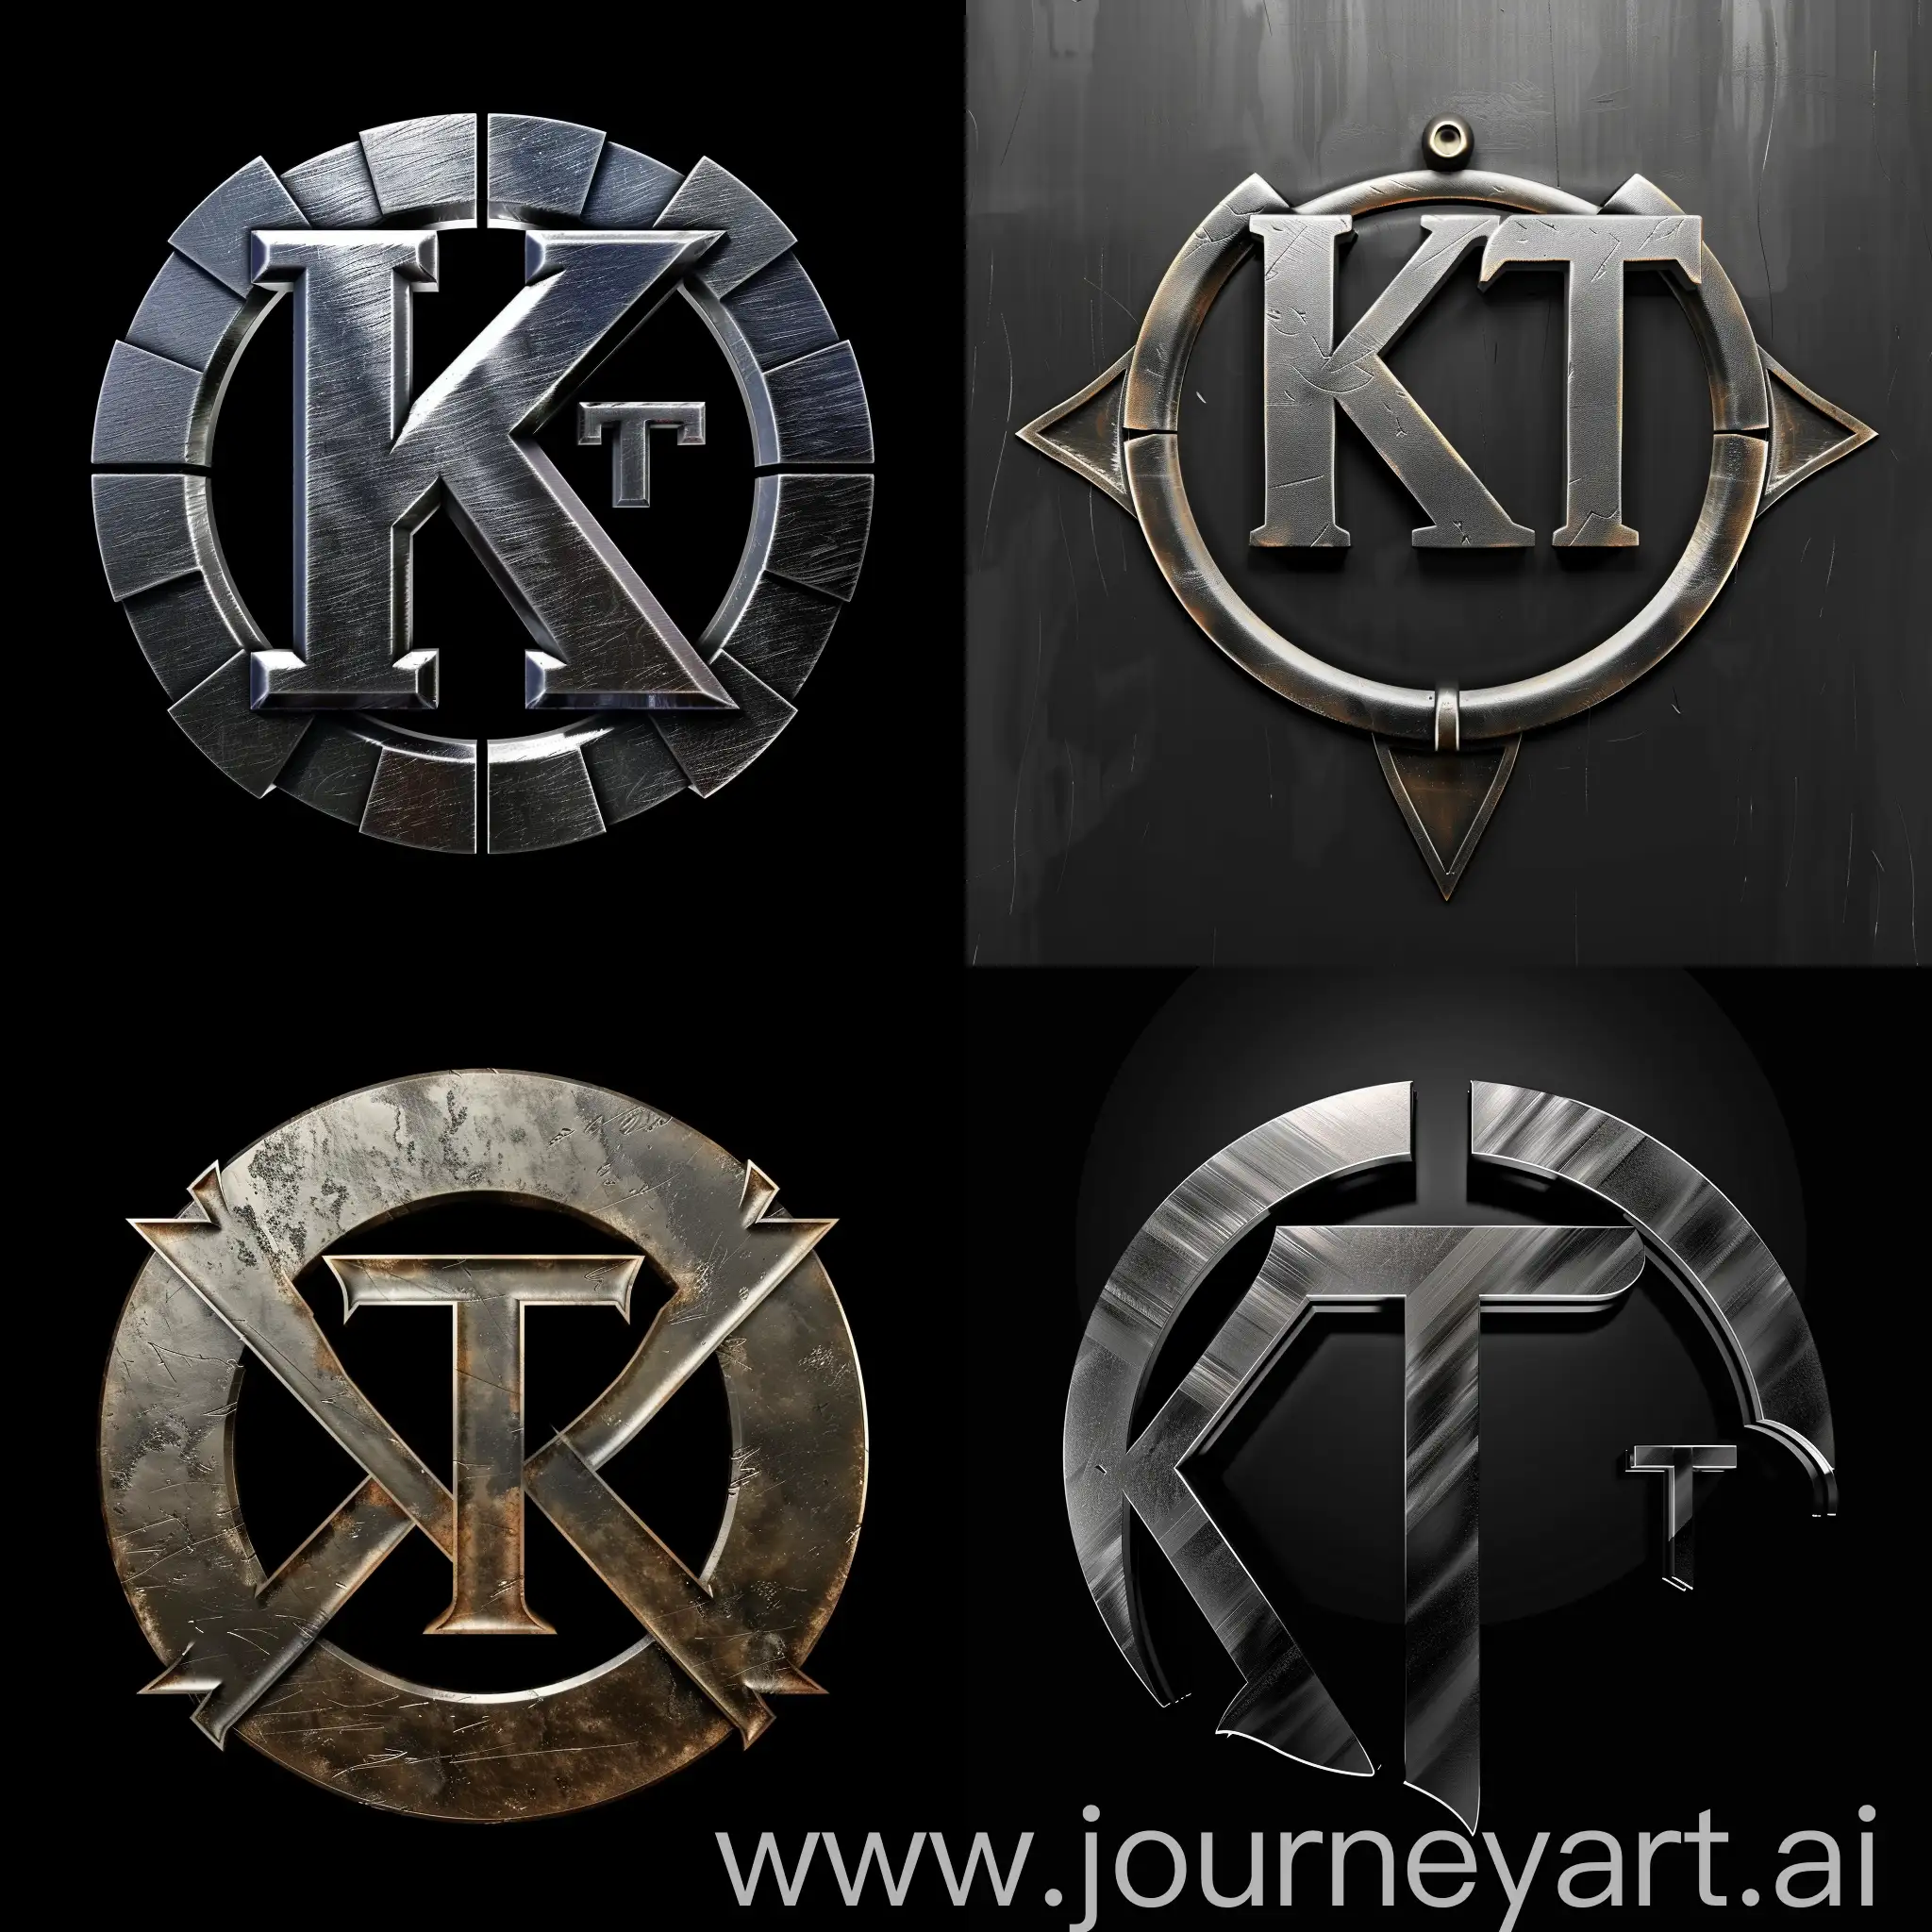 Logo ,Text K T in center, style Métal,